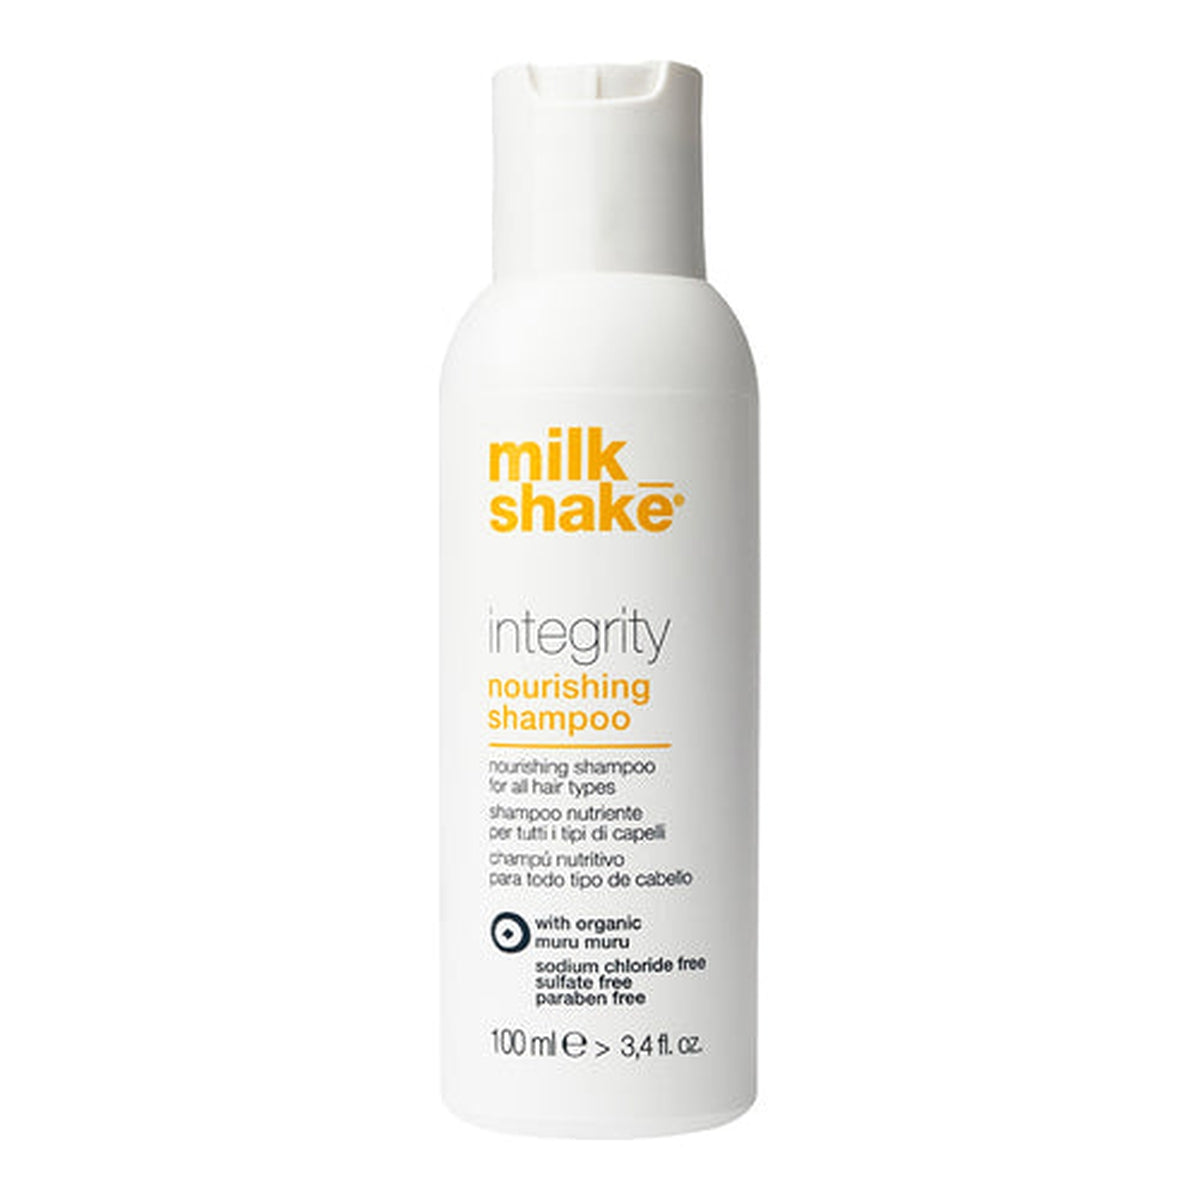 Milkshake Integrity Nourishing Shampoo 100ml